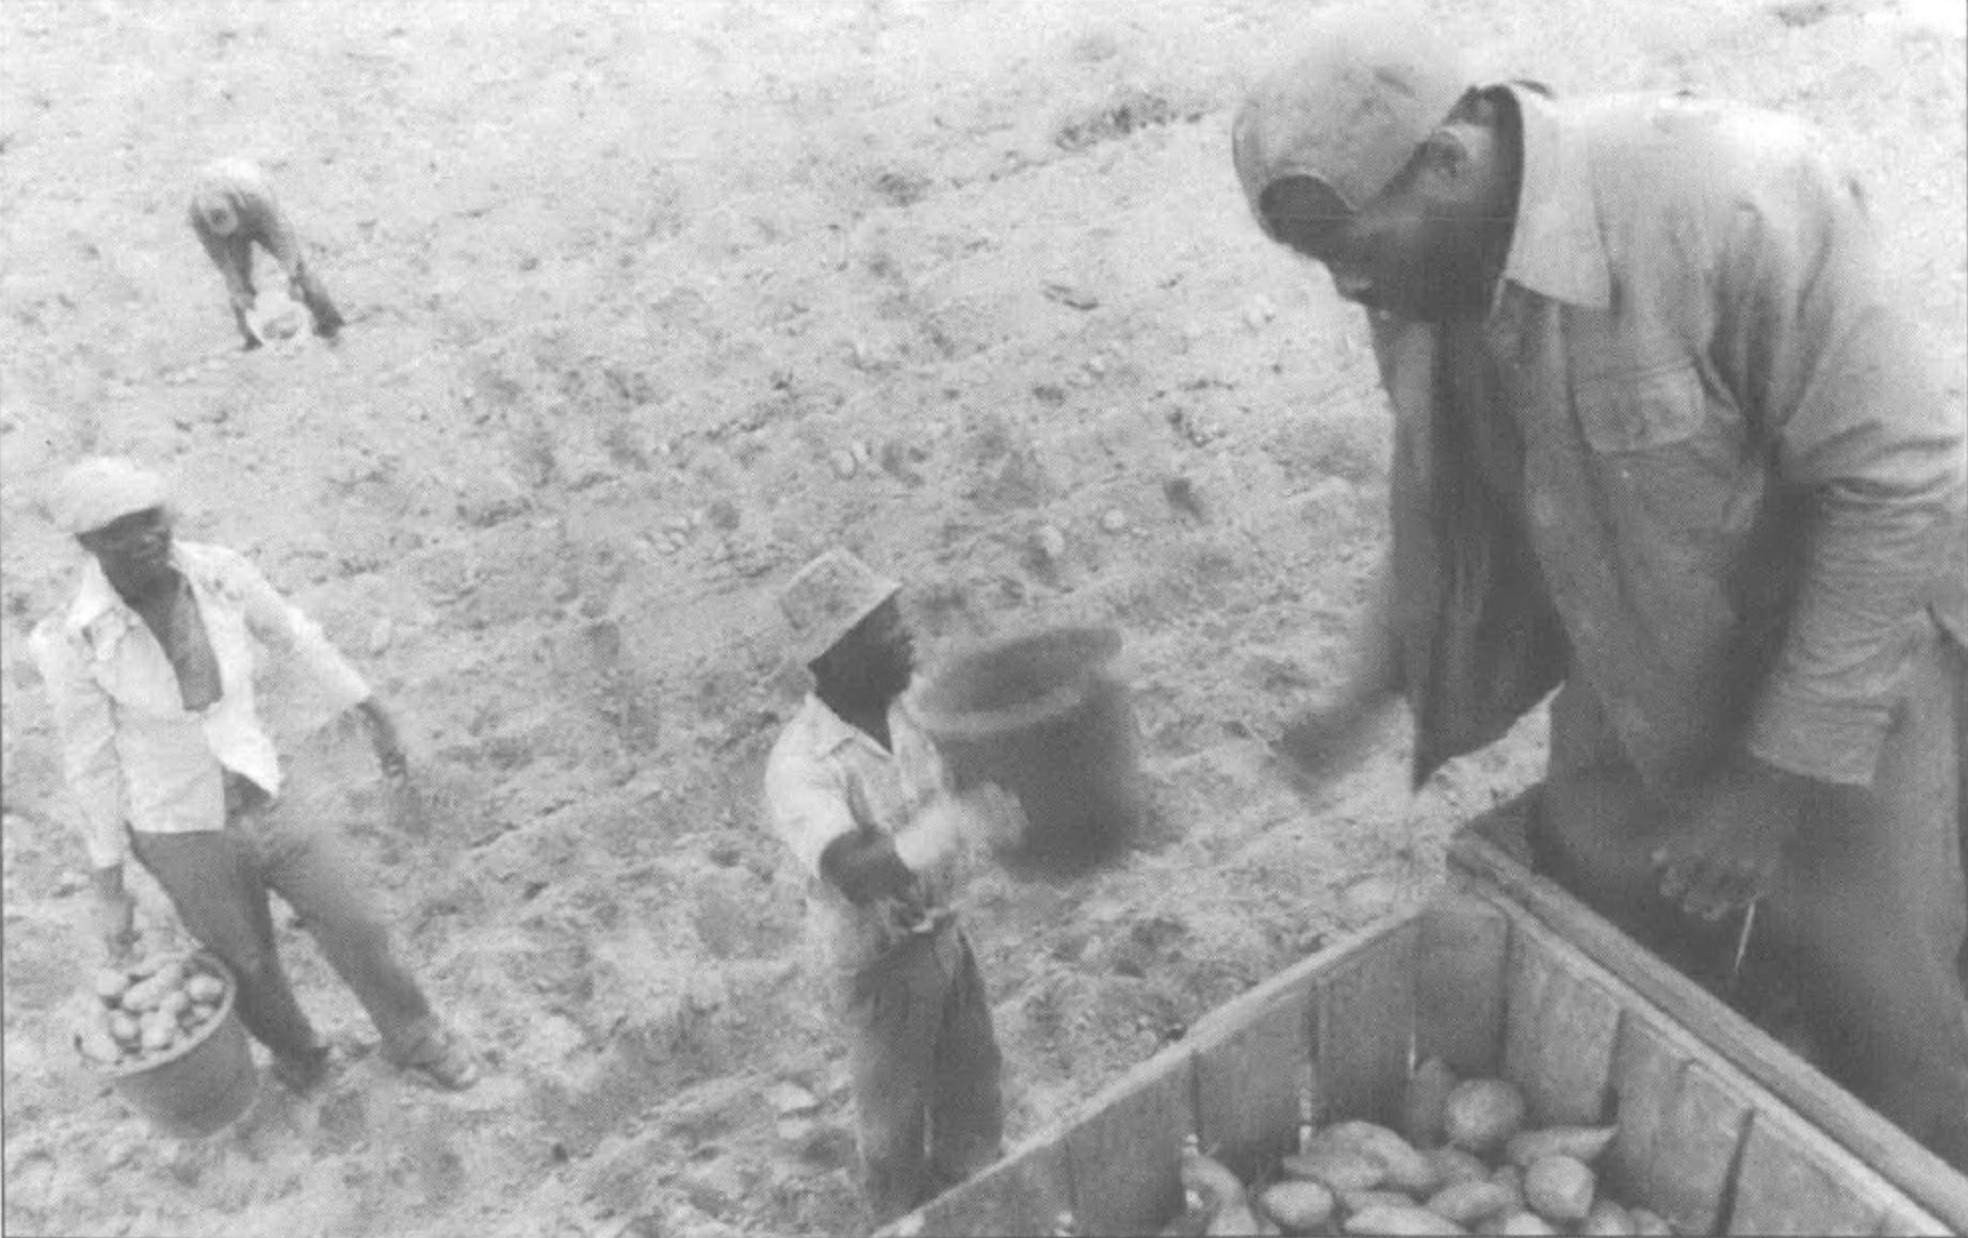 Black farmworkers working in a field